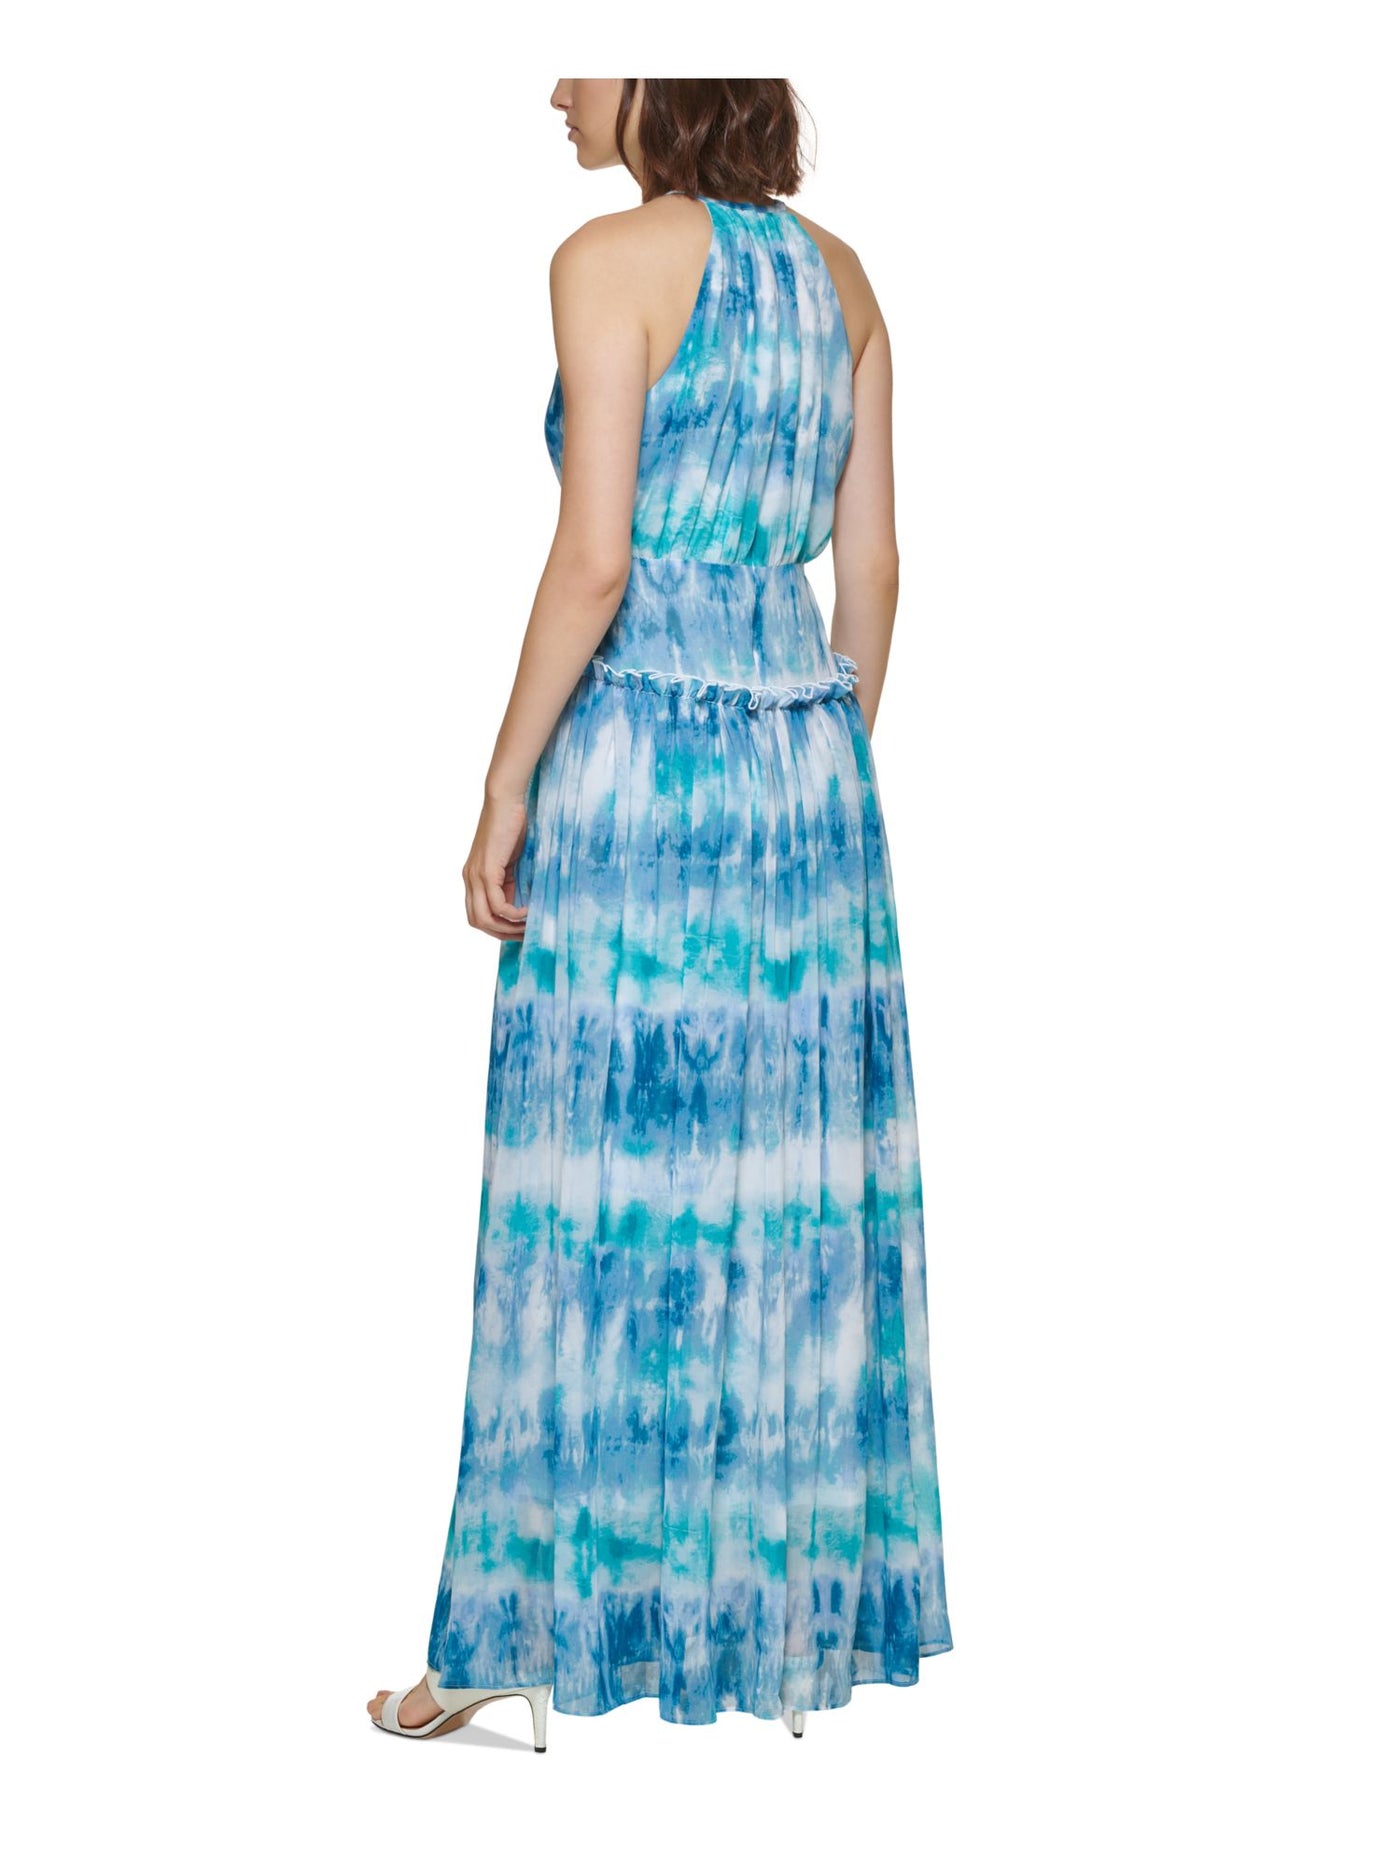 CALVIN KLEIN Womens Blue Zippered Cut Out Ruffle Trim Tie Dye Sleeveless Round Neck Full-Length Formal Gown Dress 16